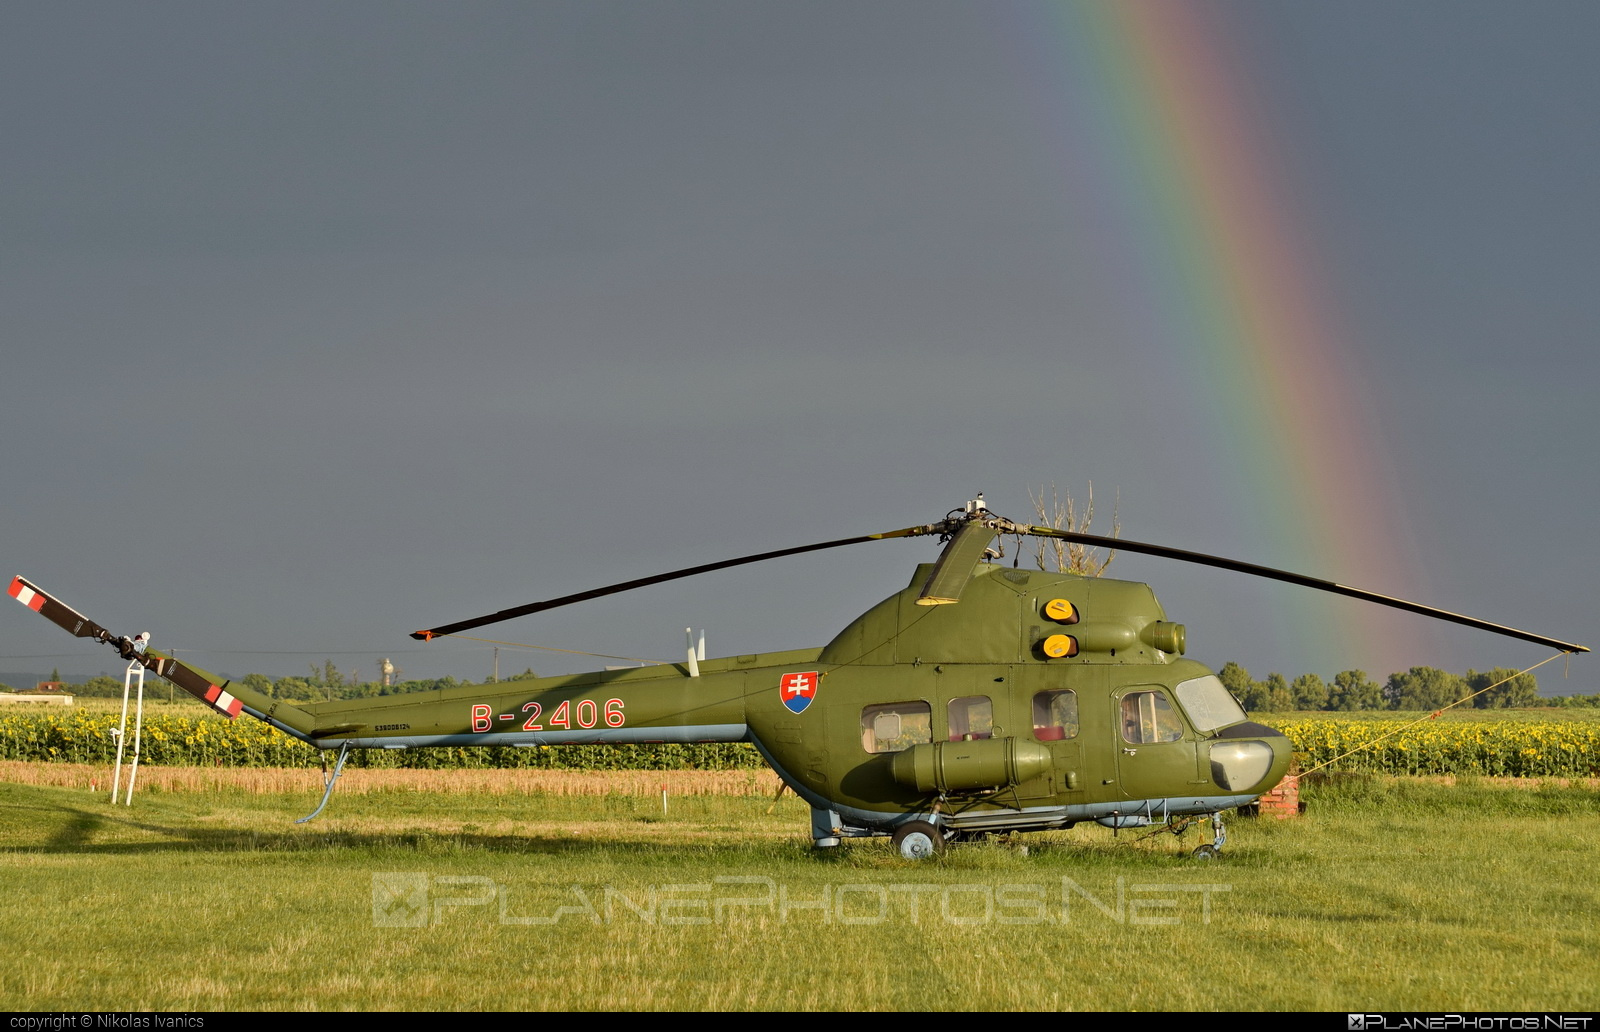 Mil Mi-2 - B-2406 operated by Letecký útvar MV SR (Slovak Government Flying Service) #SlovakGovernmentFlyingService #leteckyutvarMVSR #mi2 #mil #mil2 #milhelicopters #milmi2